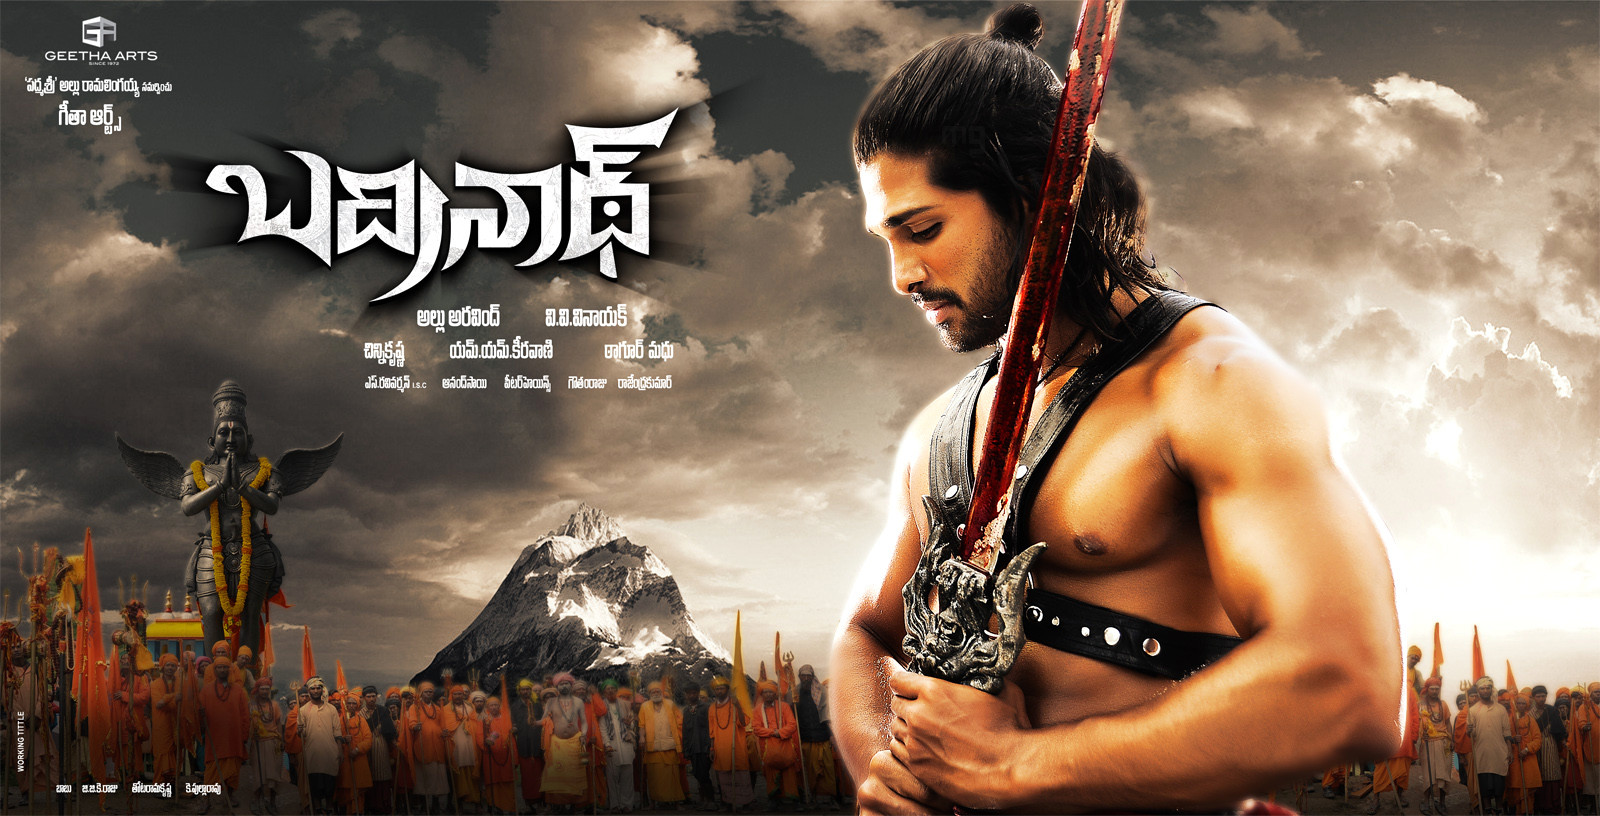 Badrinath full movie in hindi dubbed download utorrent for iphone corcheteras torrentz